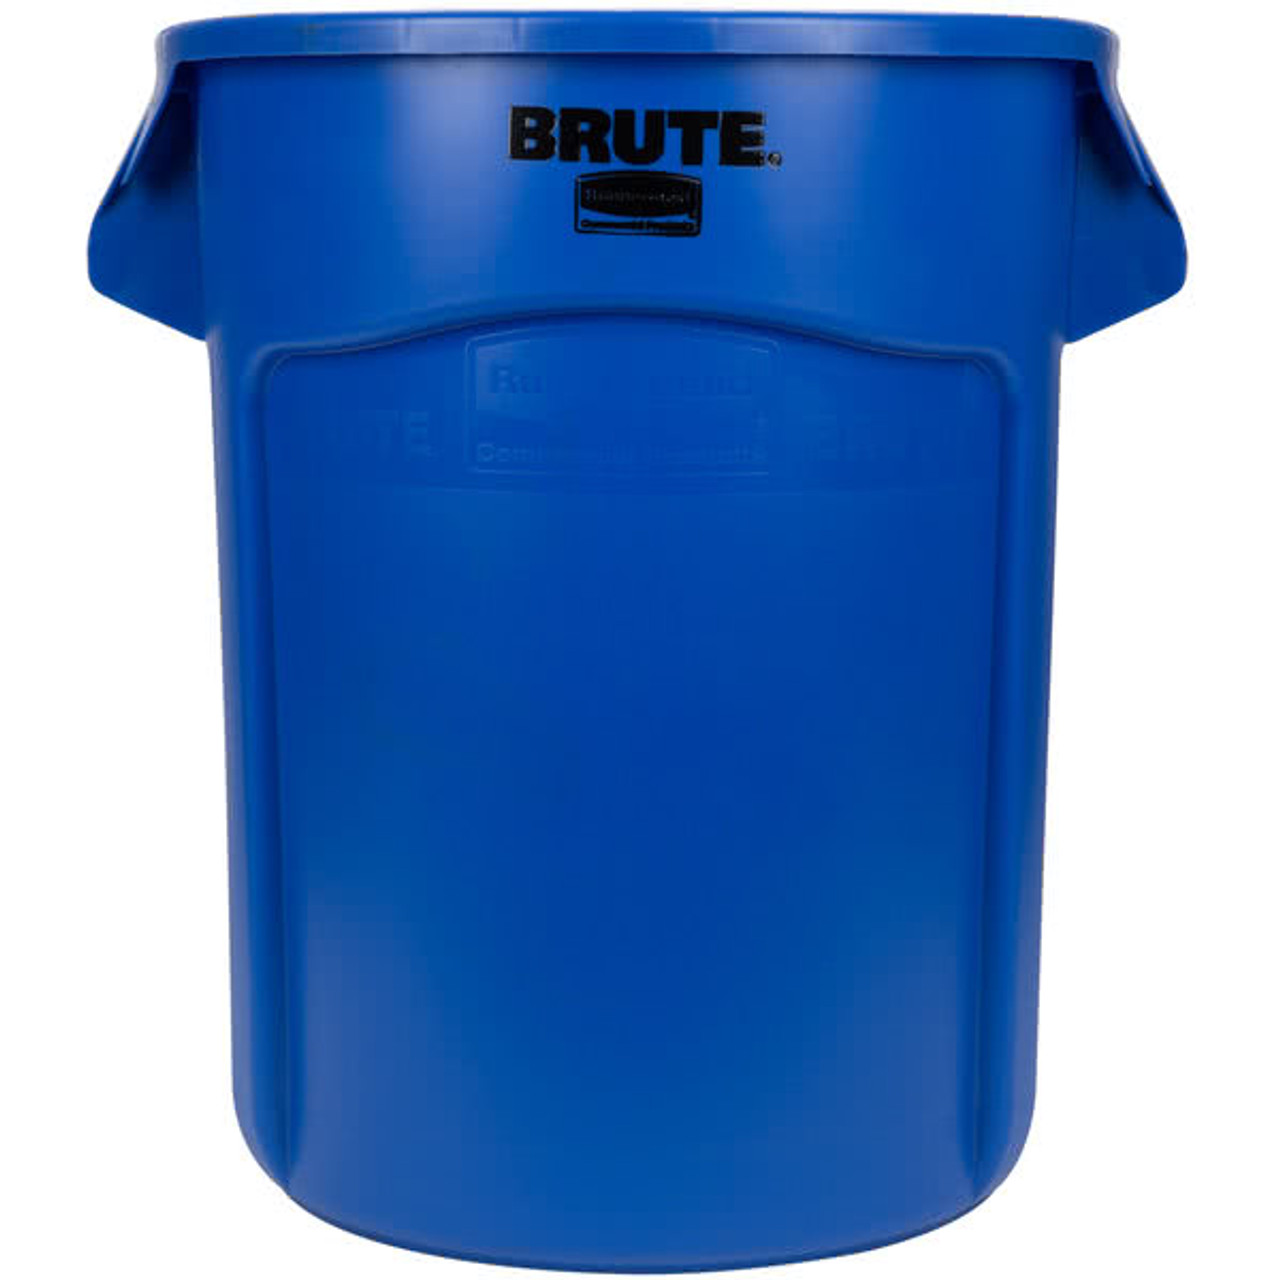 Rubbermaid Brute Container 75.7 L - Blue